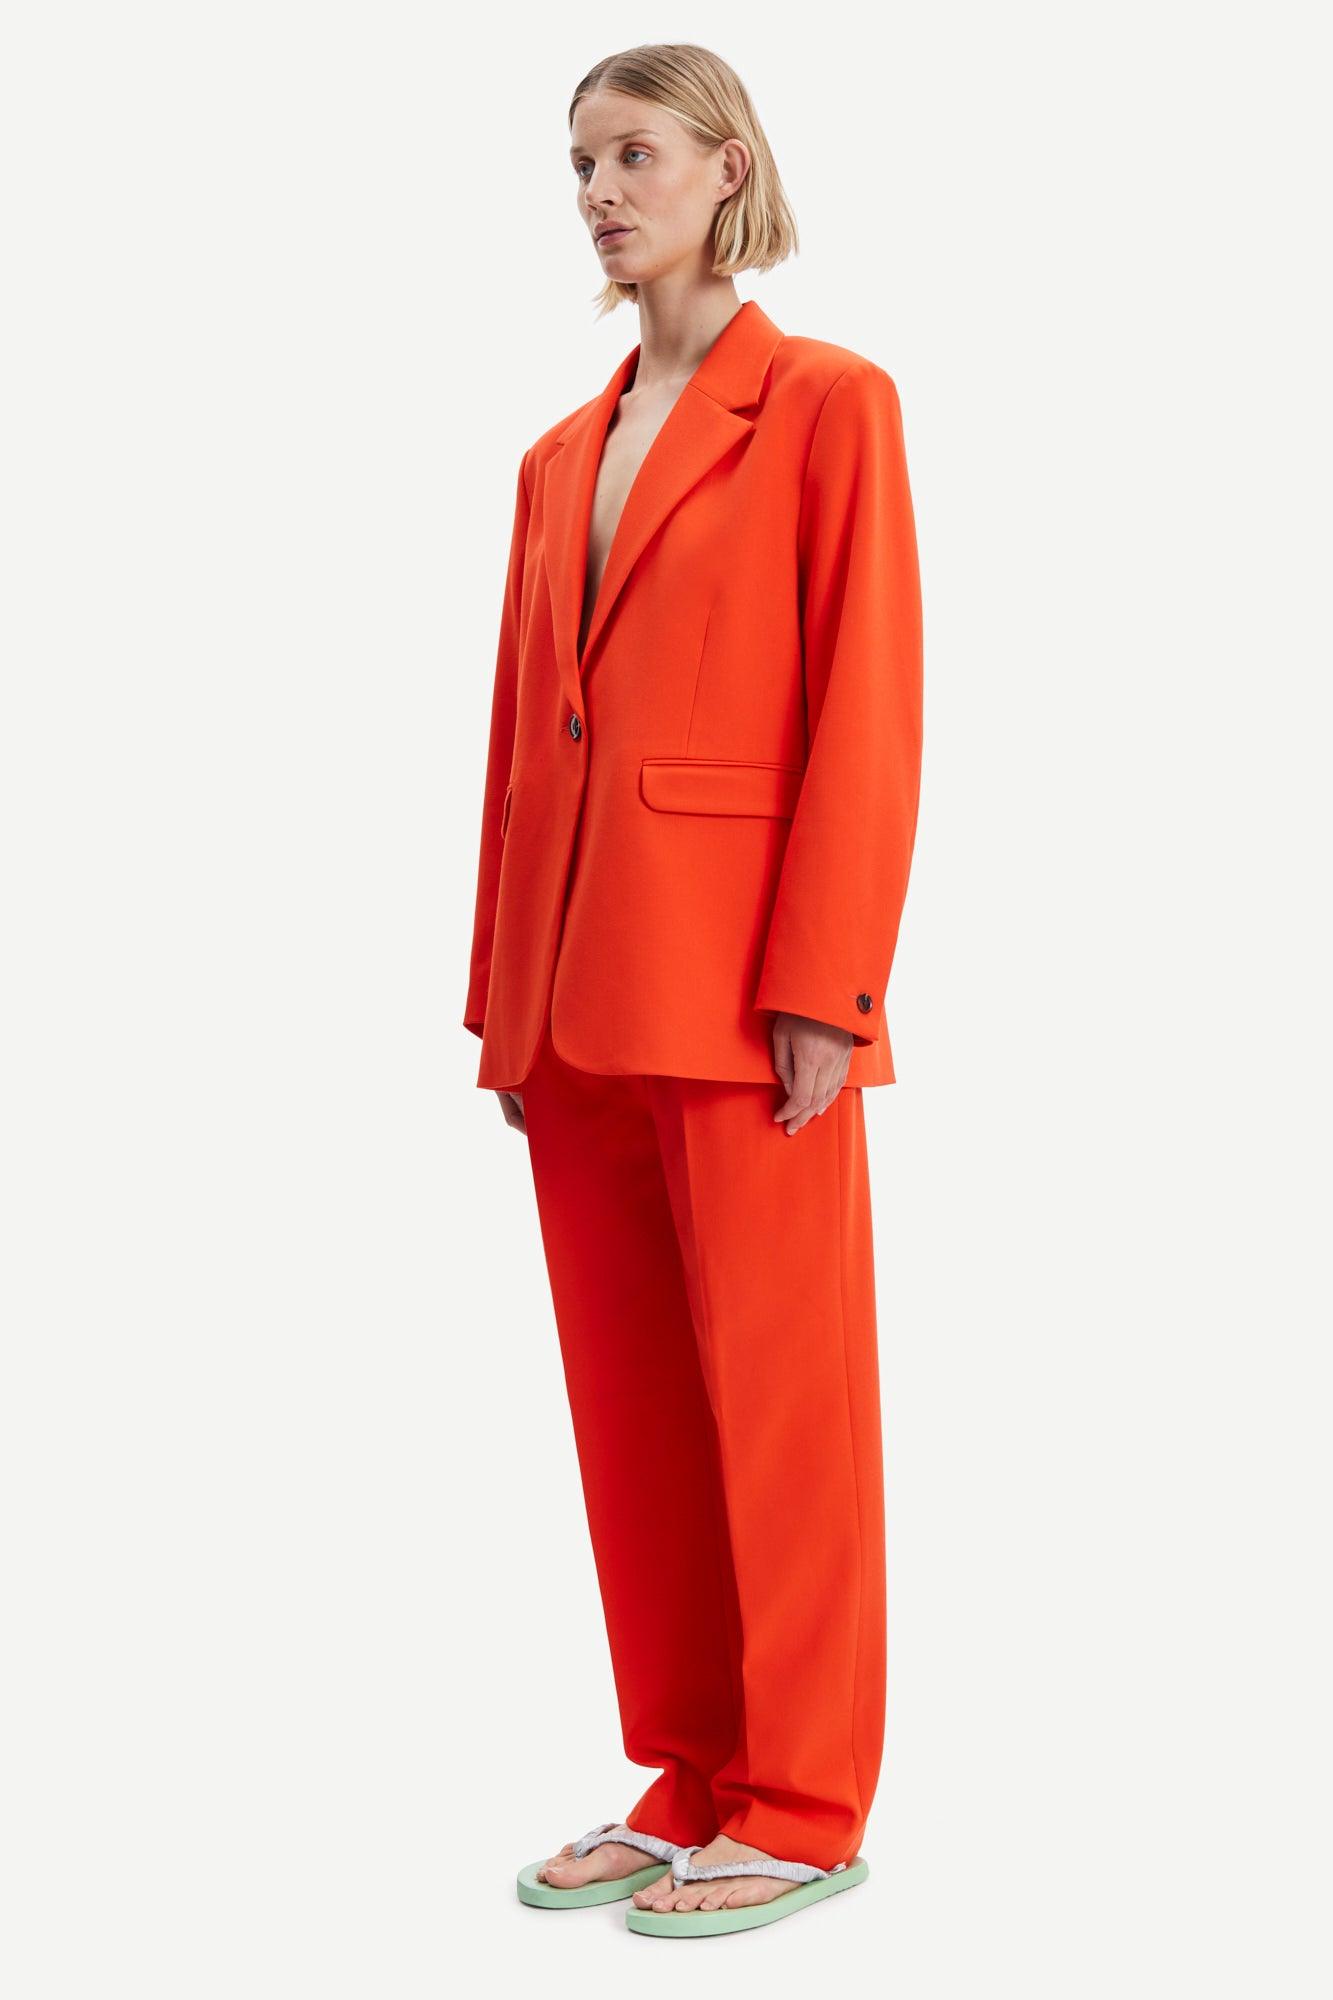 Cotton Plain Orange Cropped Trouser, Size: 28-38, Model Name/Number: PA001- ORANGE at Rs 400/piece in Jaipur